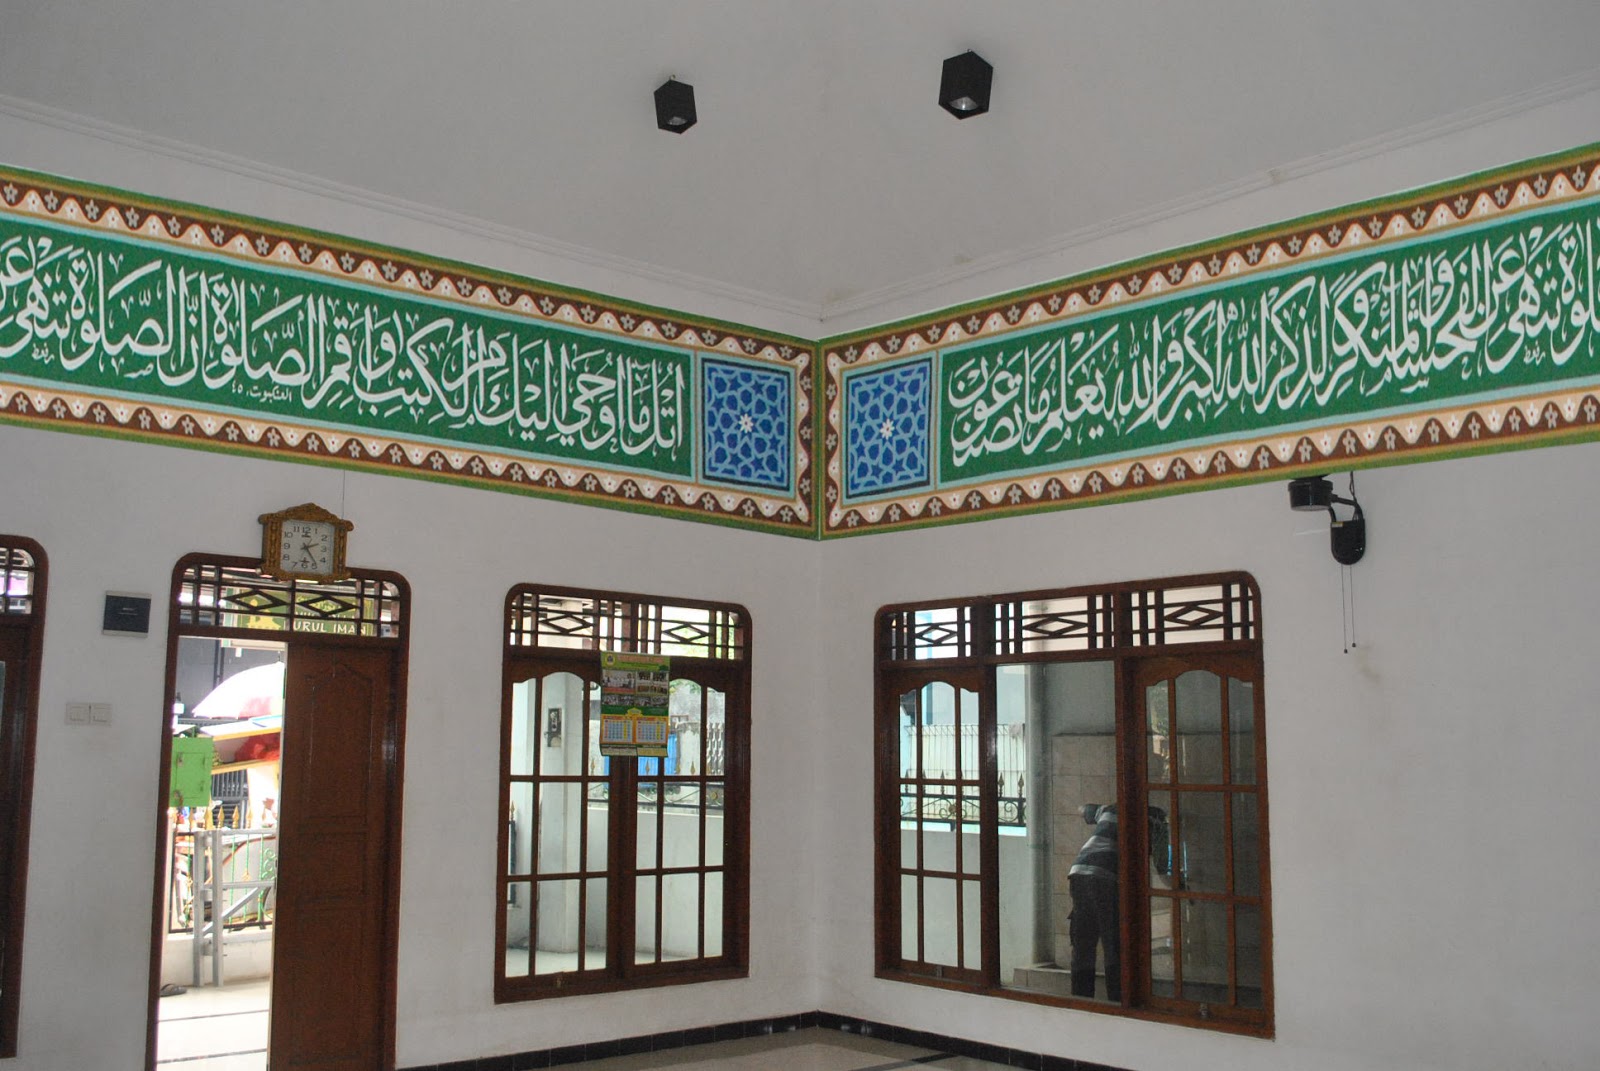  Tulisan Kaligrafi Masjid Nurul Huda Contoh Kaligrafi